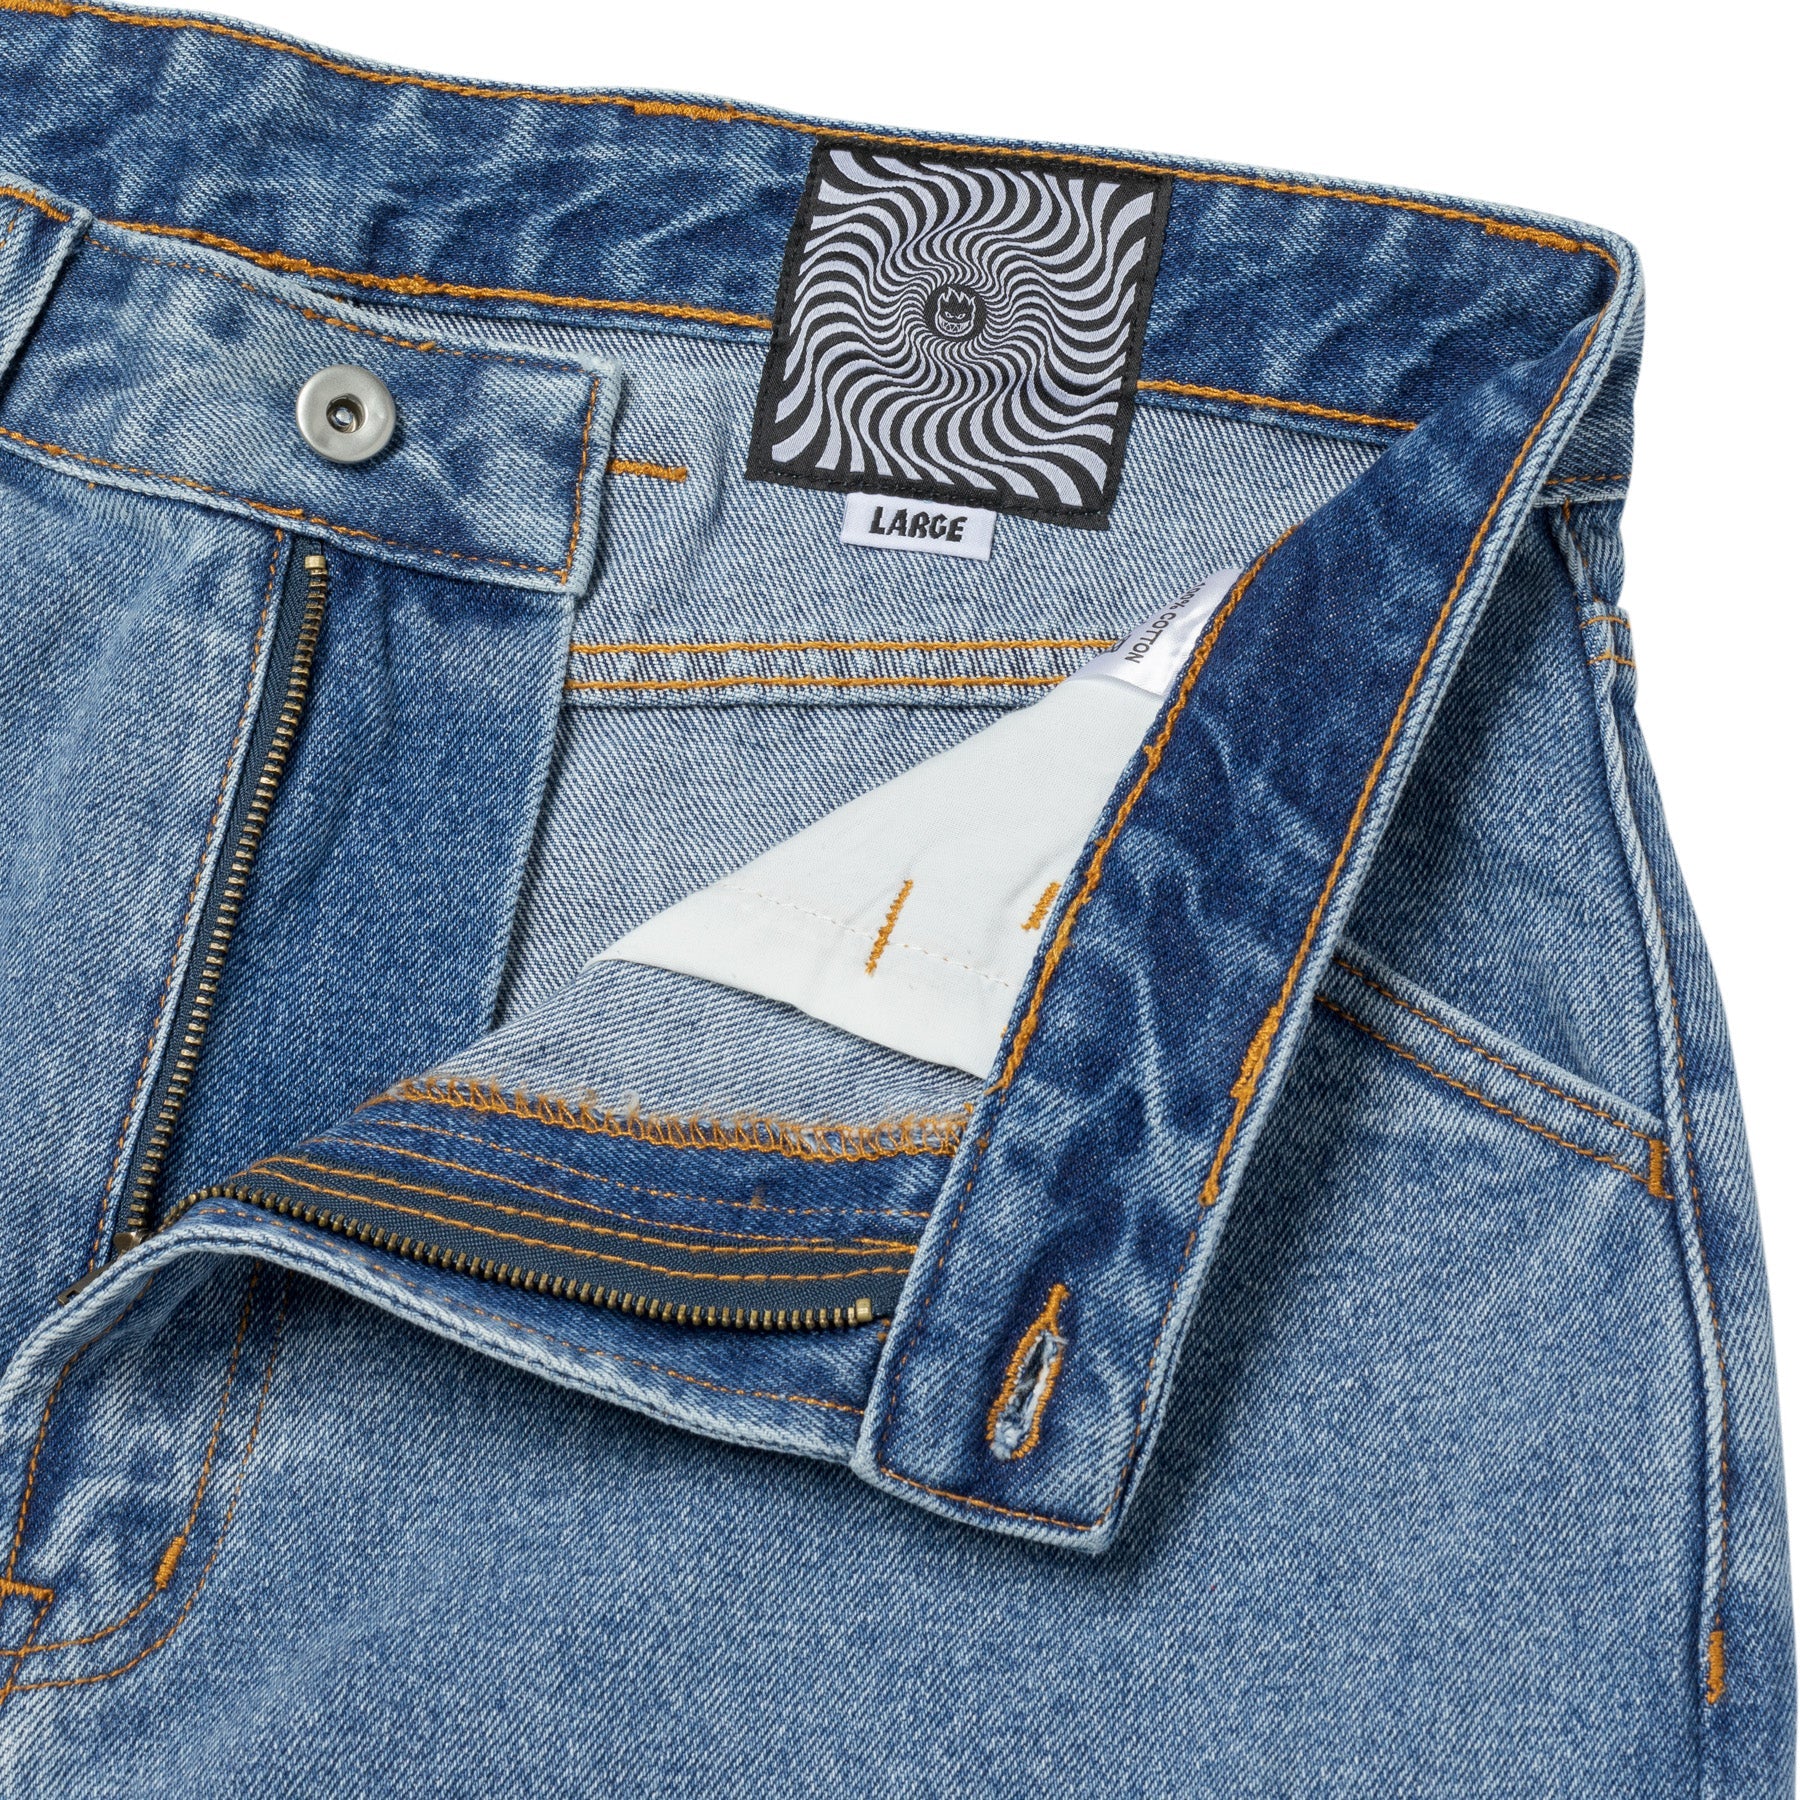 Bighead Fill Spitfire Jeans Detail